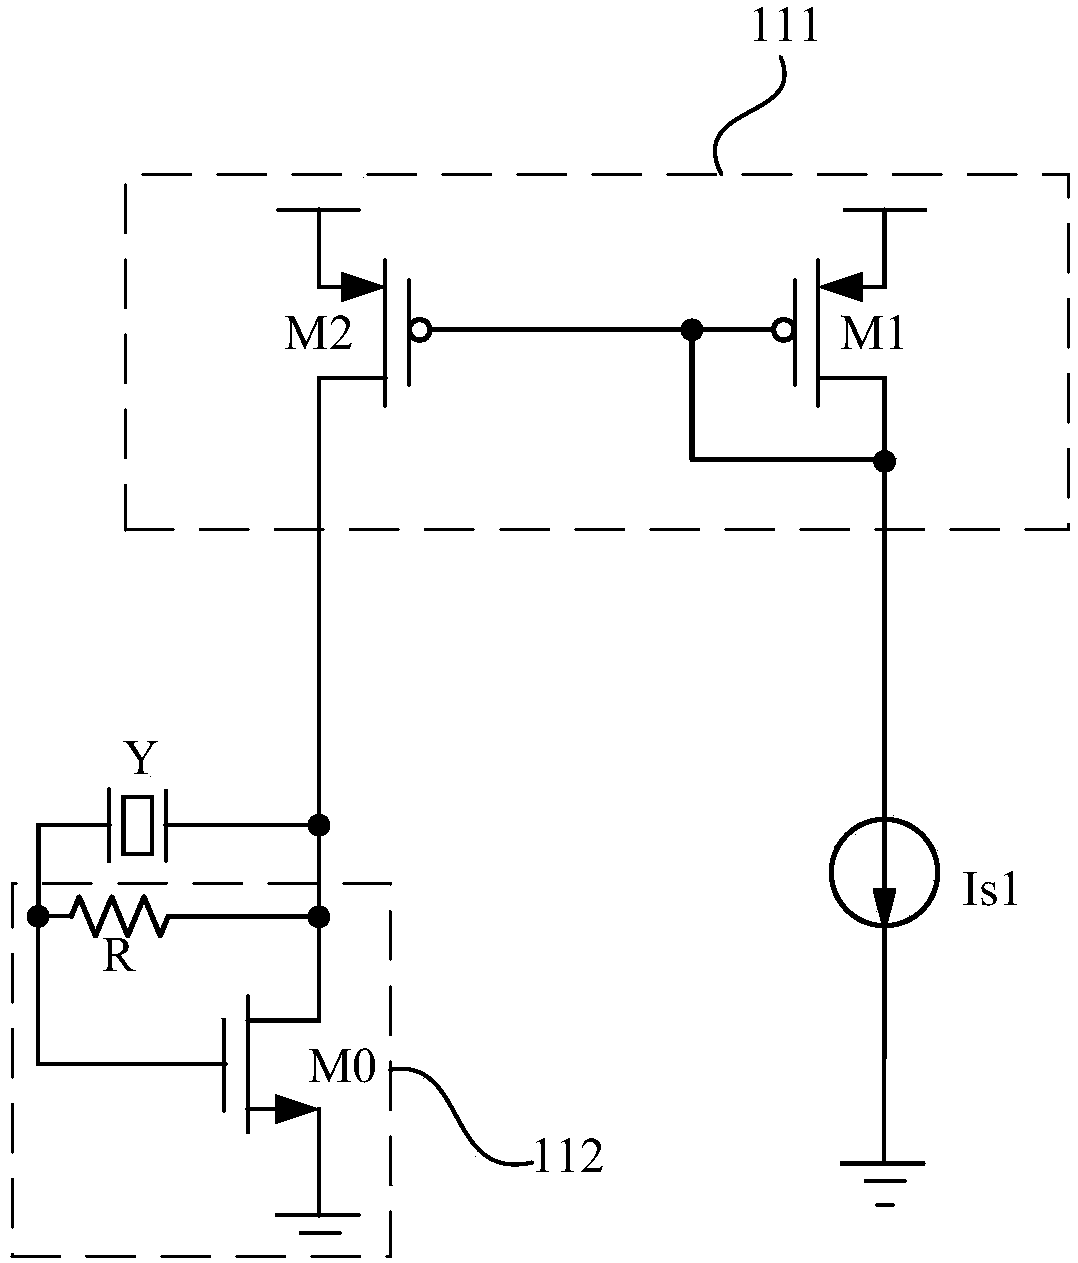 Crystal oscillator circuit